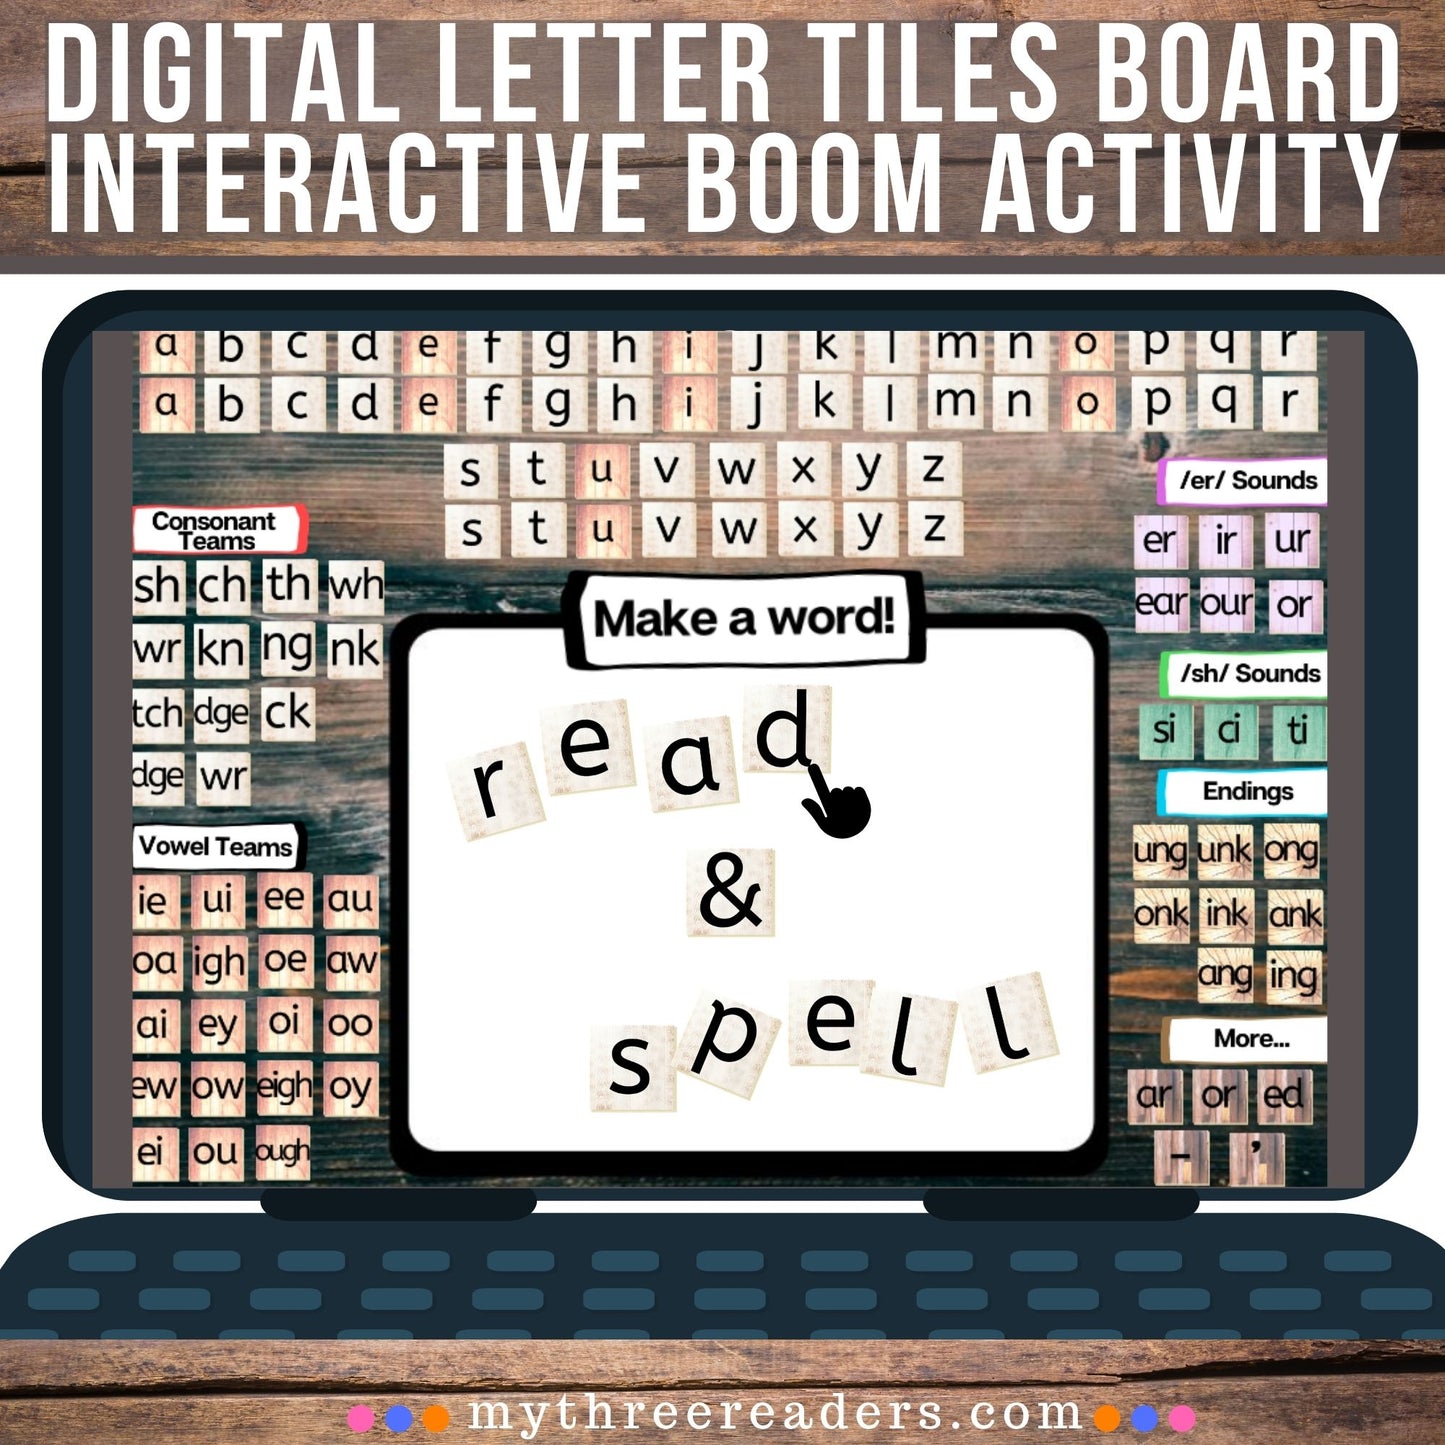 Digital Letter Tiles Board - Interactive Activity for Readers & Spellers